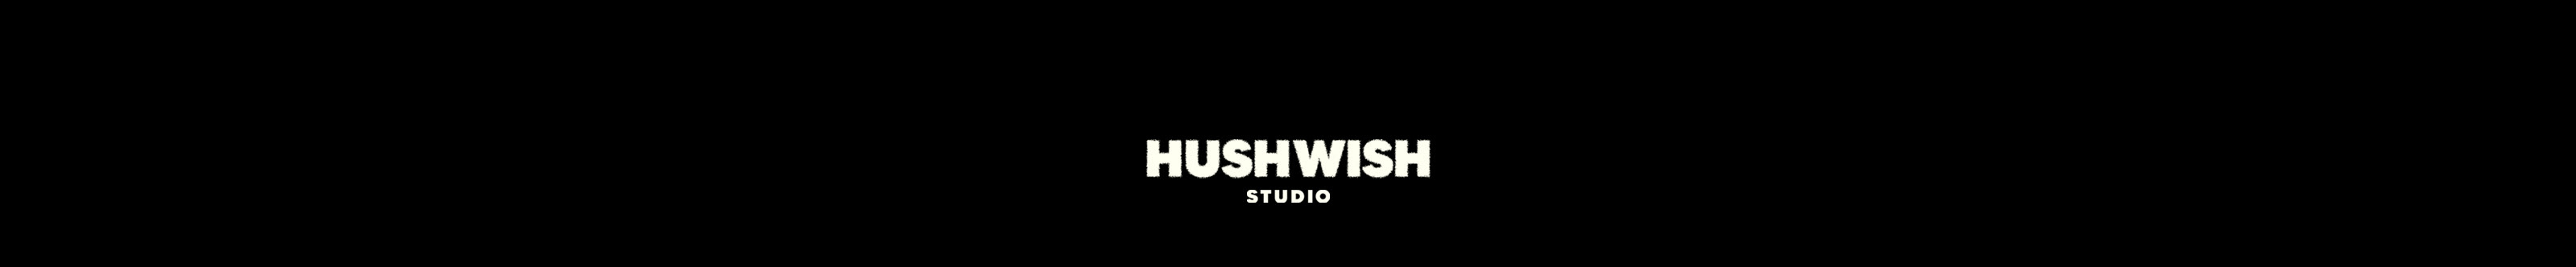 HUSHWISH 허쉬위쉬's profile banner